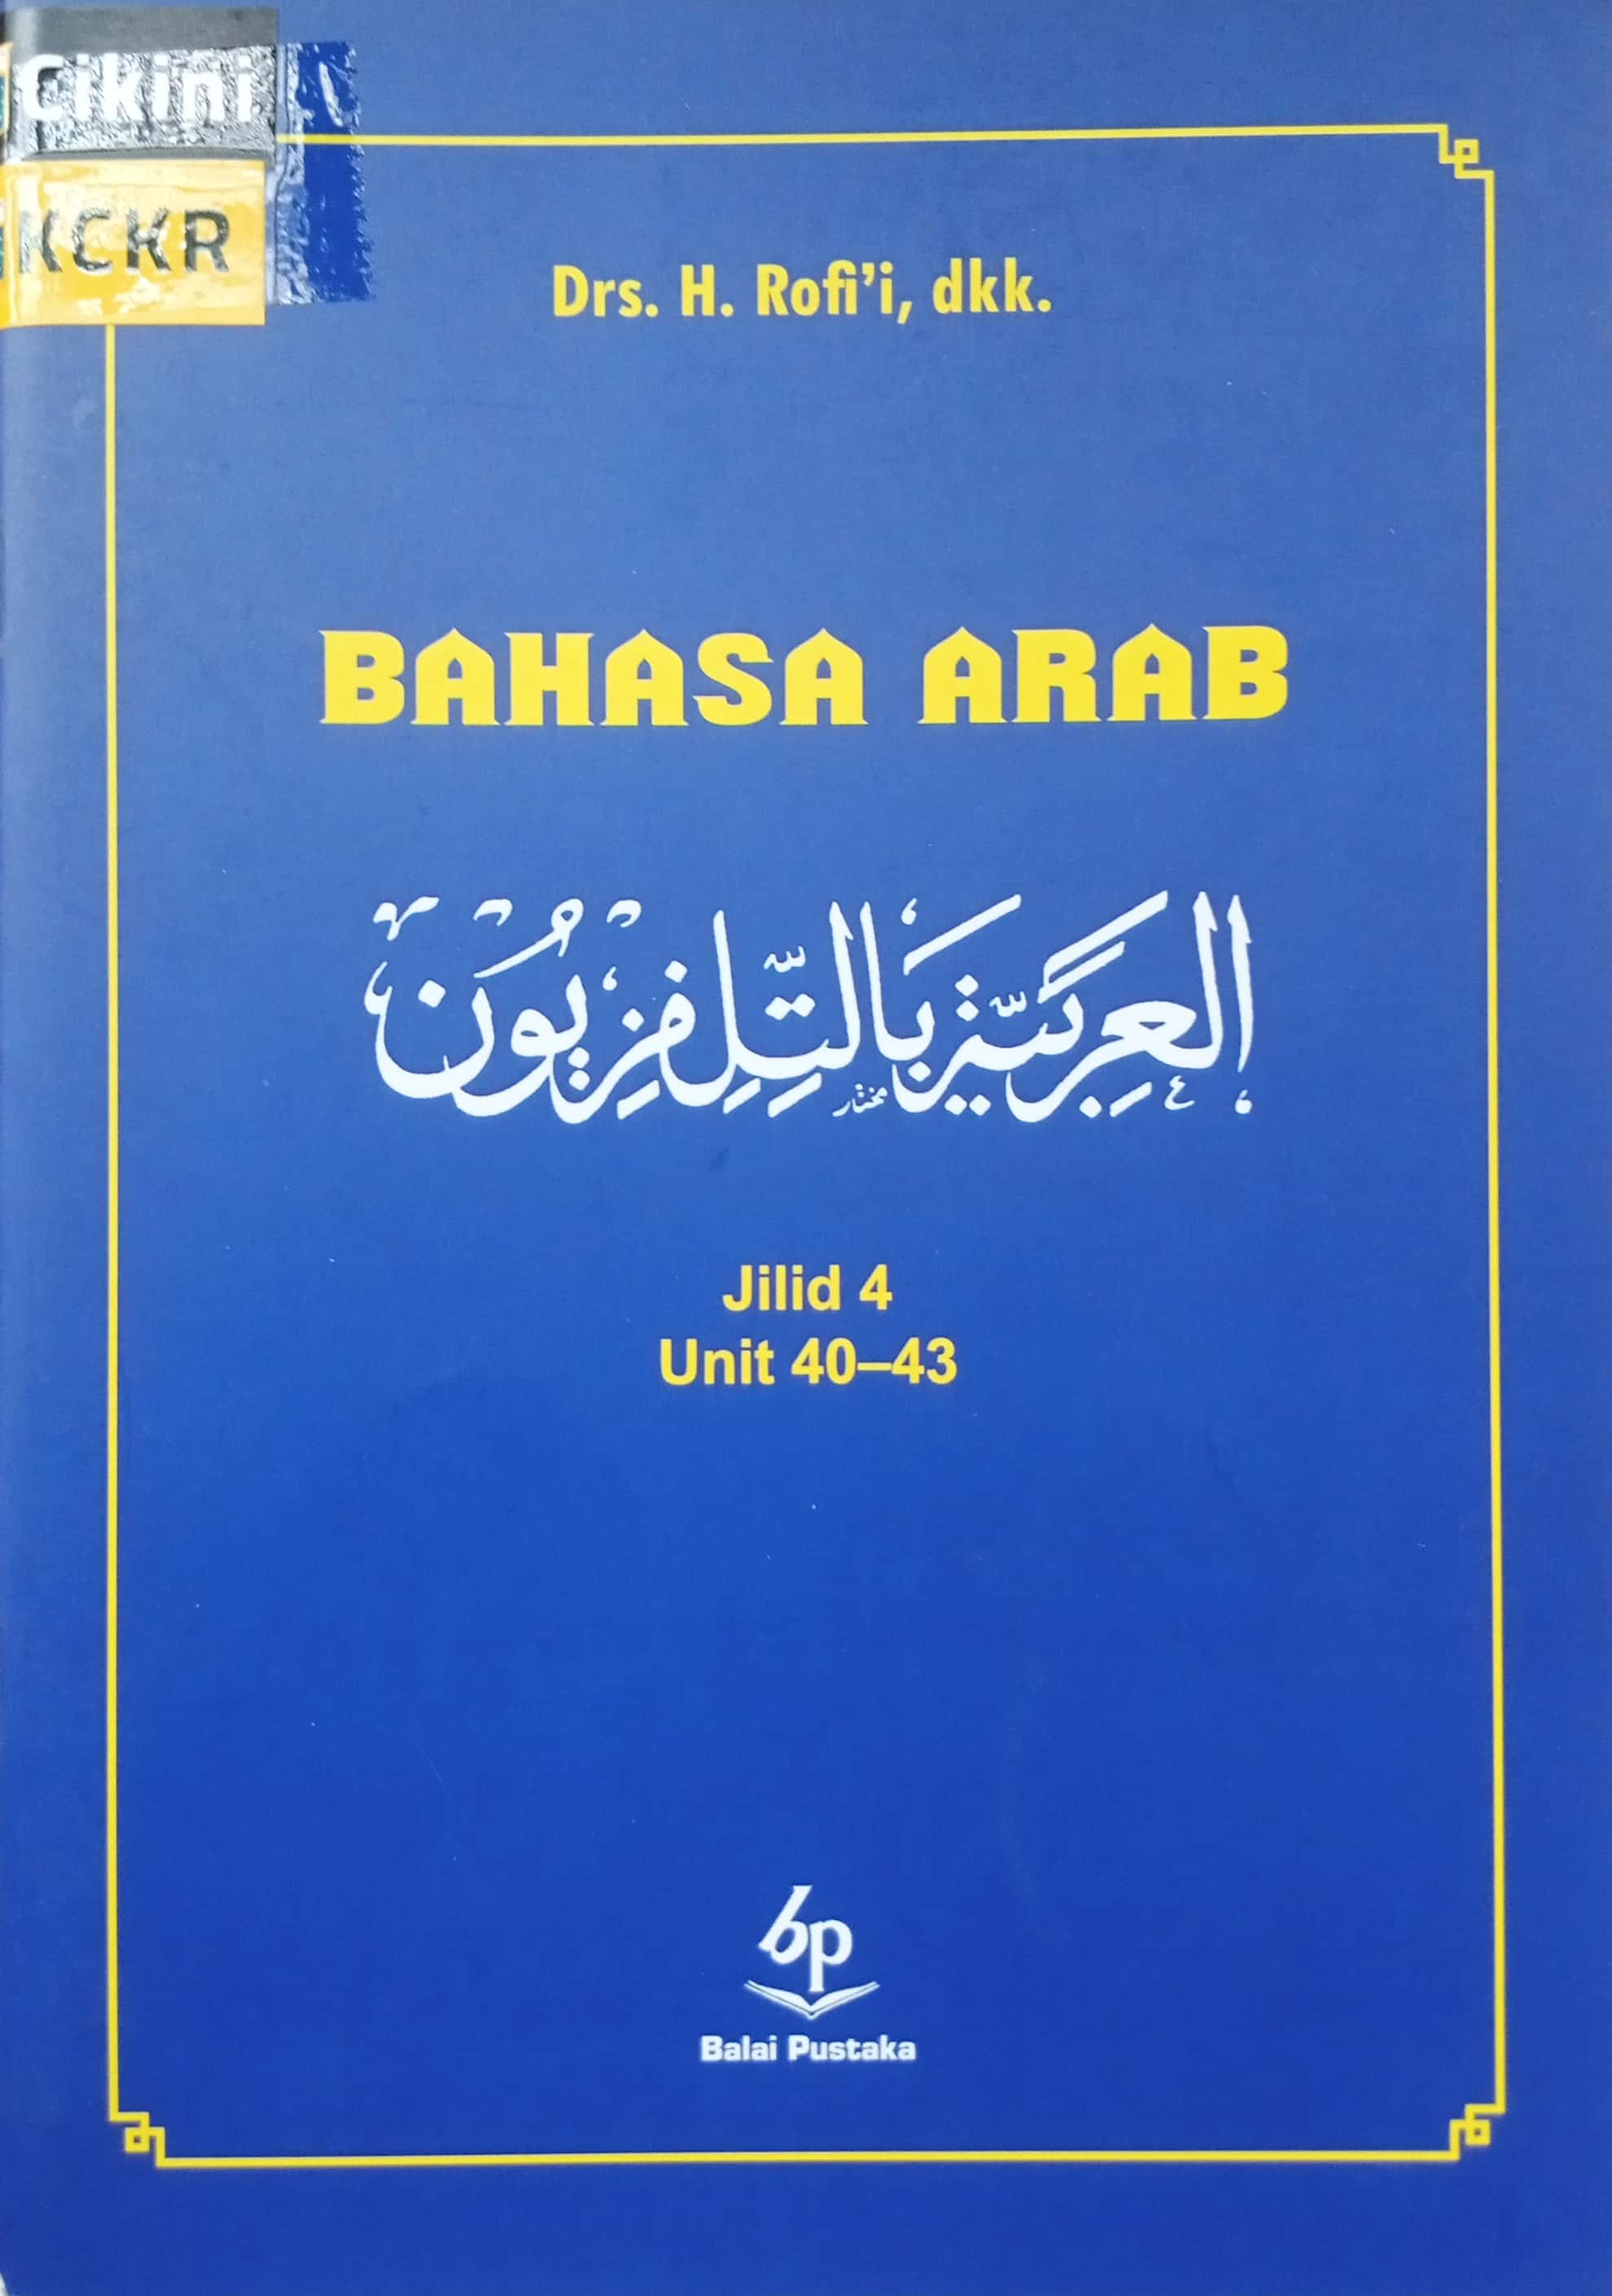 Bahasa Arab jilid 4 unit 40-43